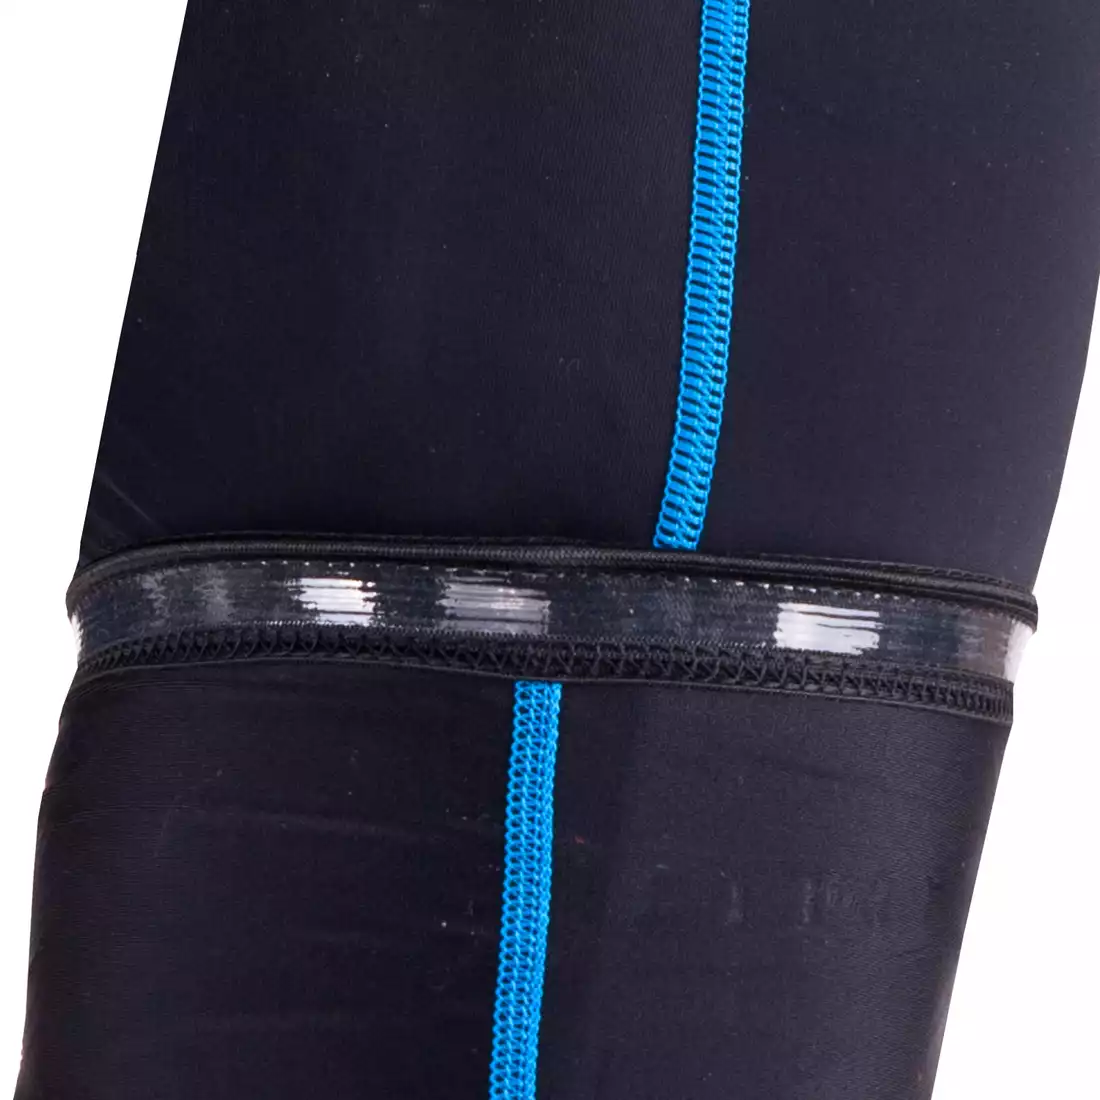 DEKO POCKET men's cycling shorts, black-blue